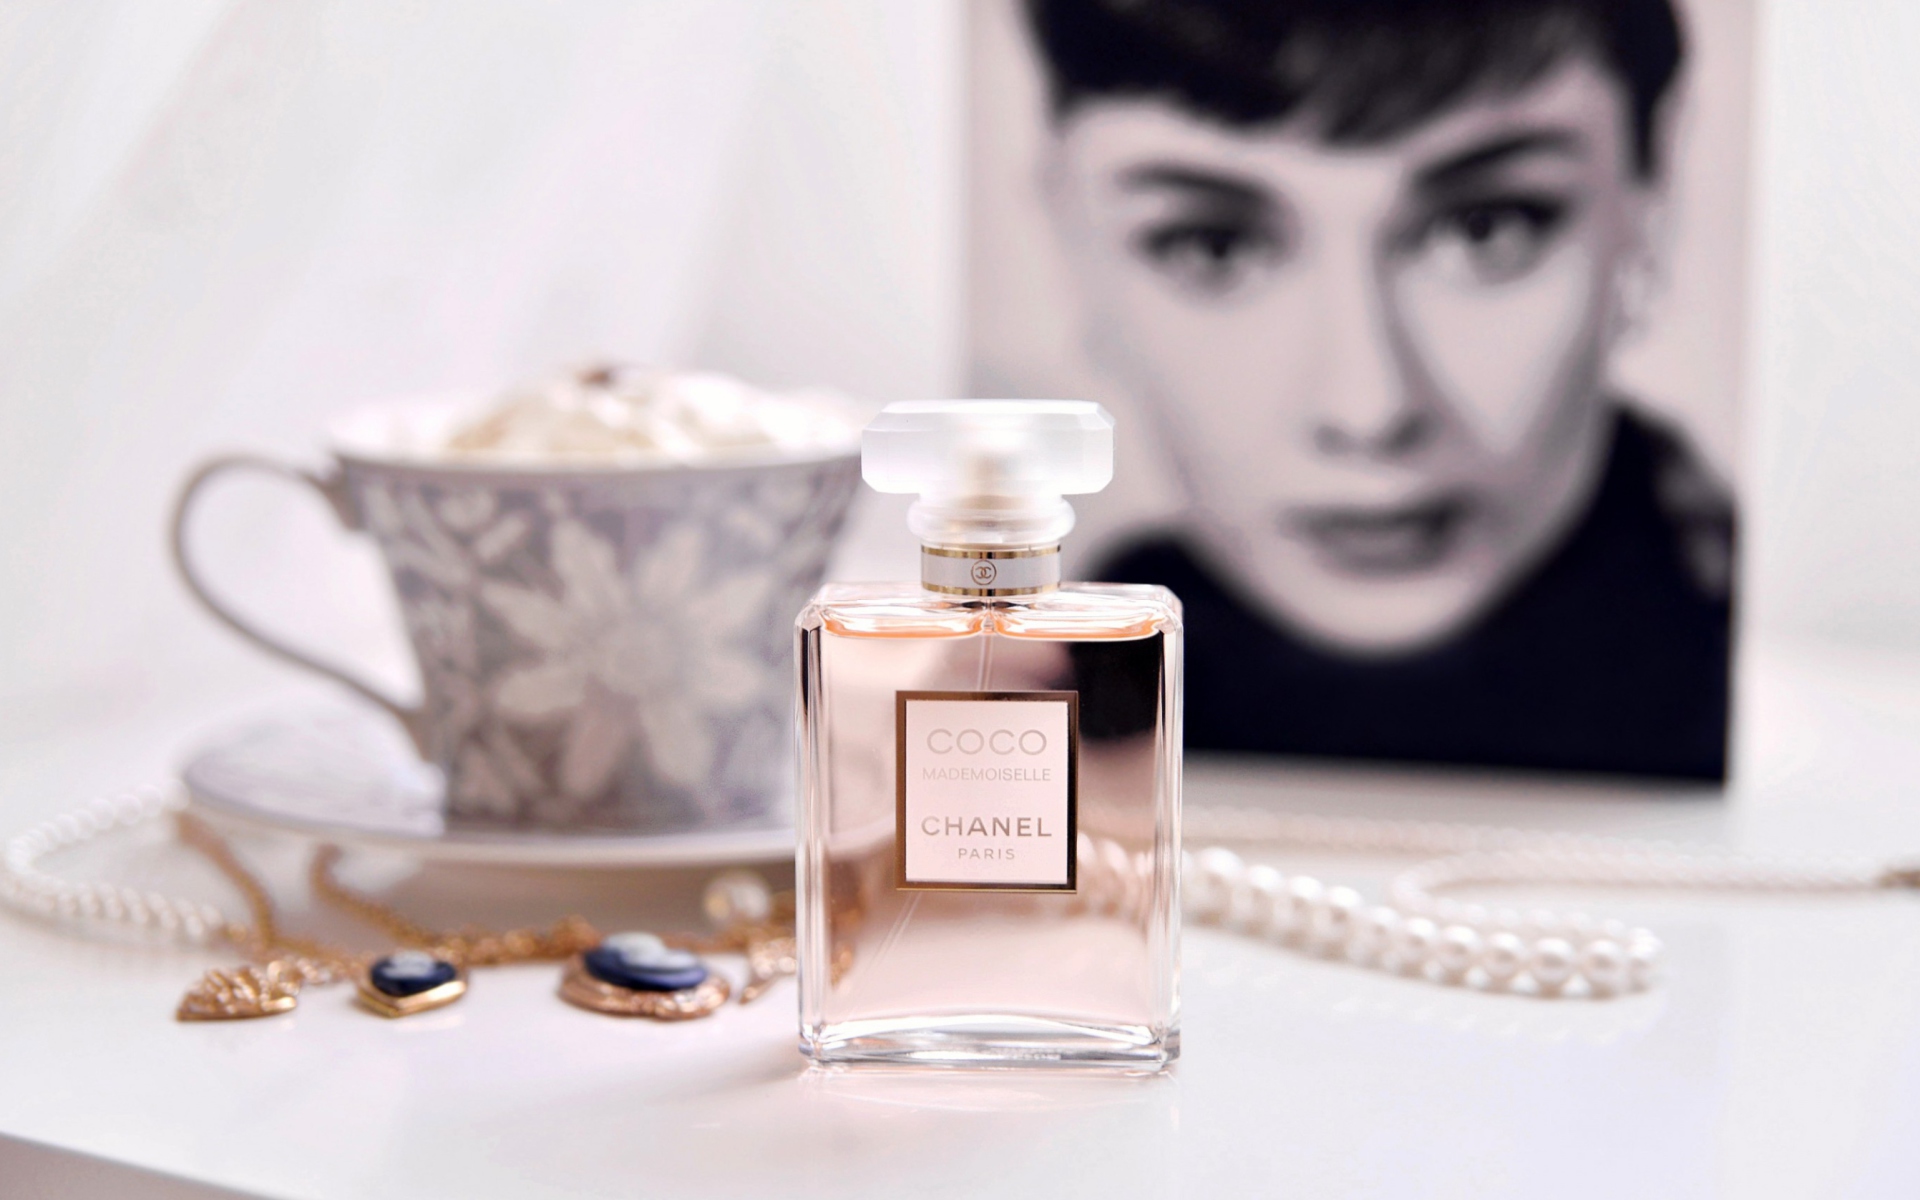 Chanel Coco Mademoiselle Perfume Wallpaper For Widescreen Desktop Pc 19x1080 Full Hd